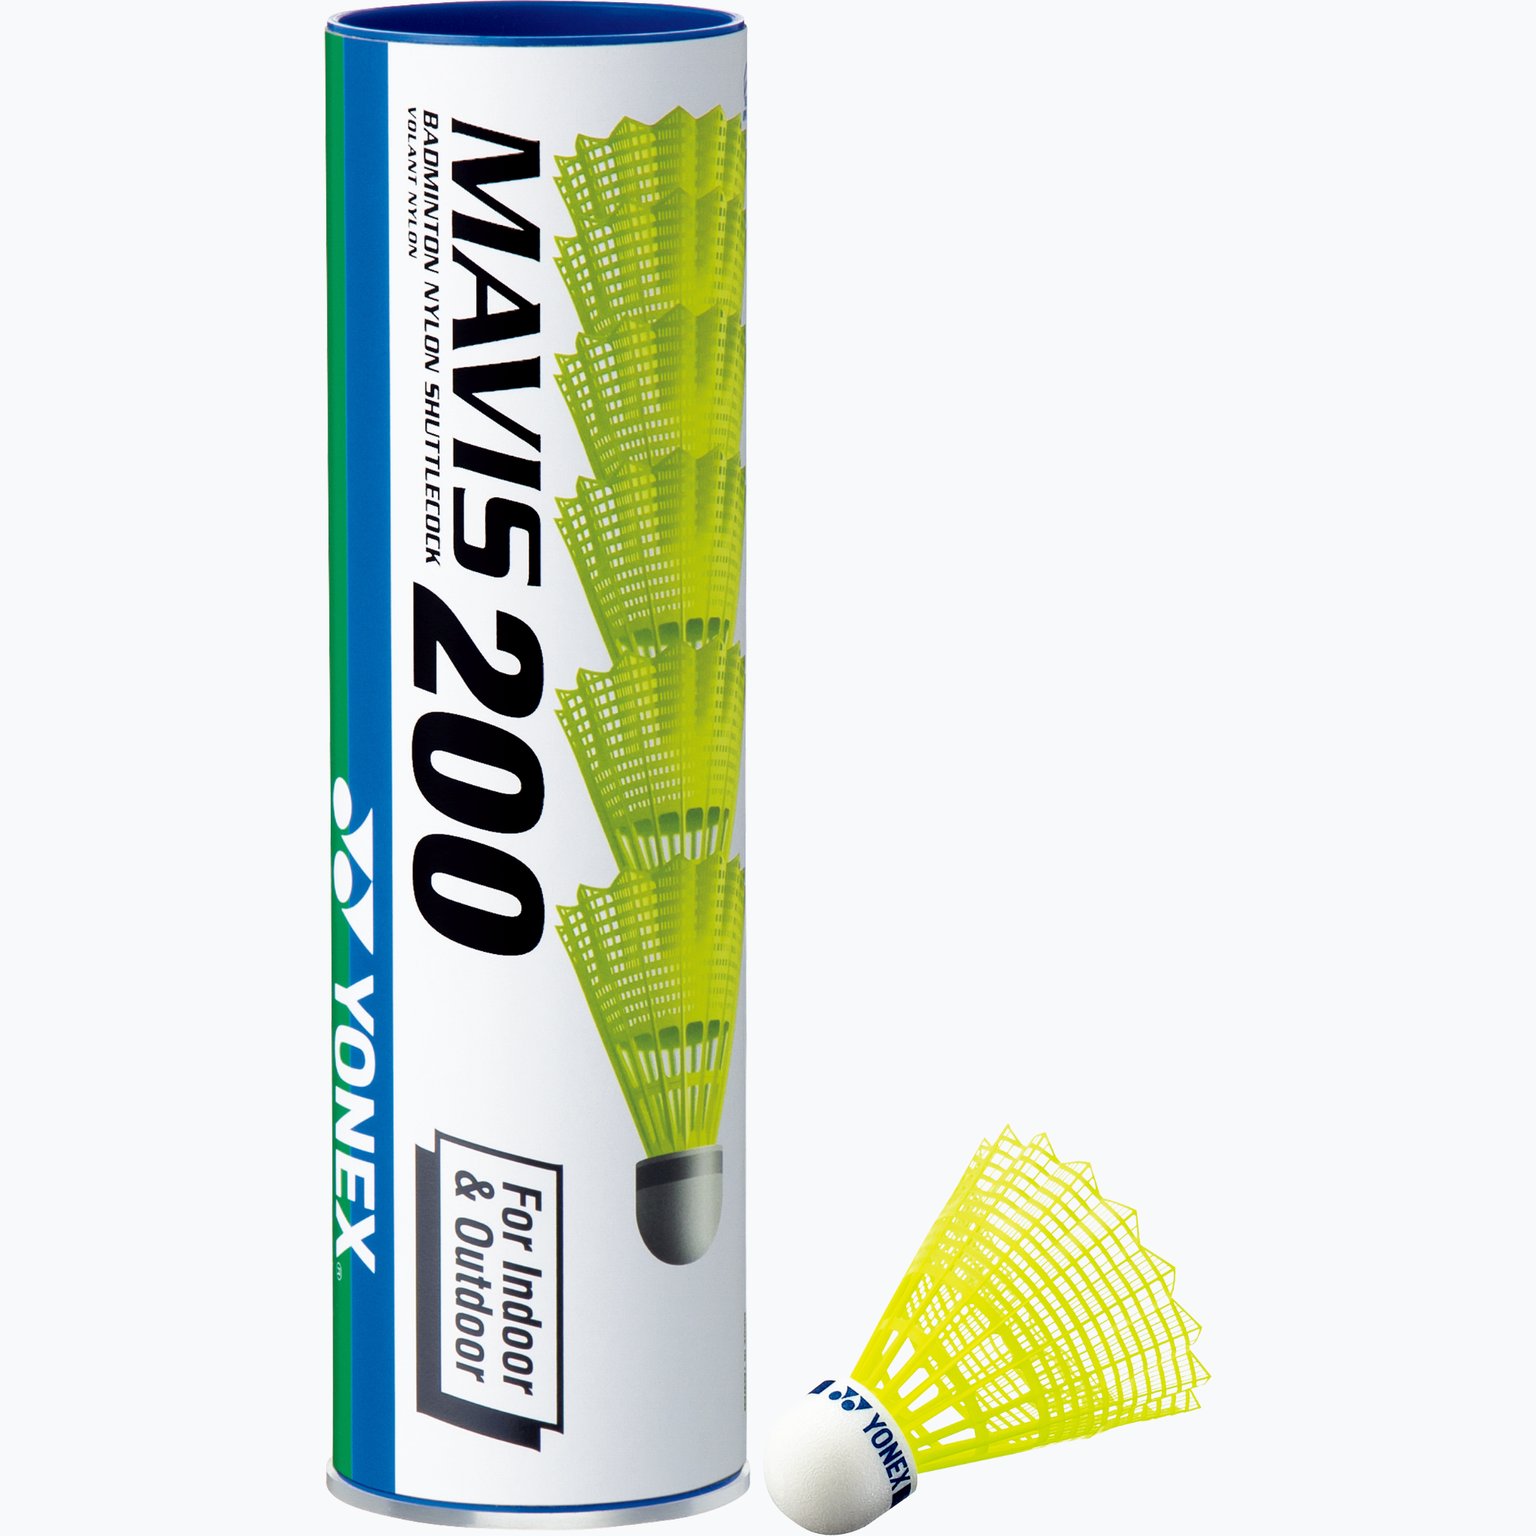 Mavis 200 6-pack badmintonbollar